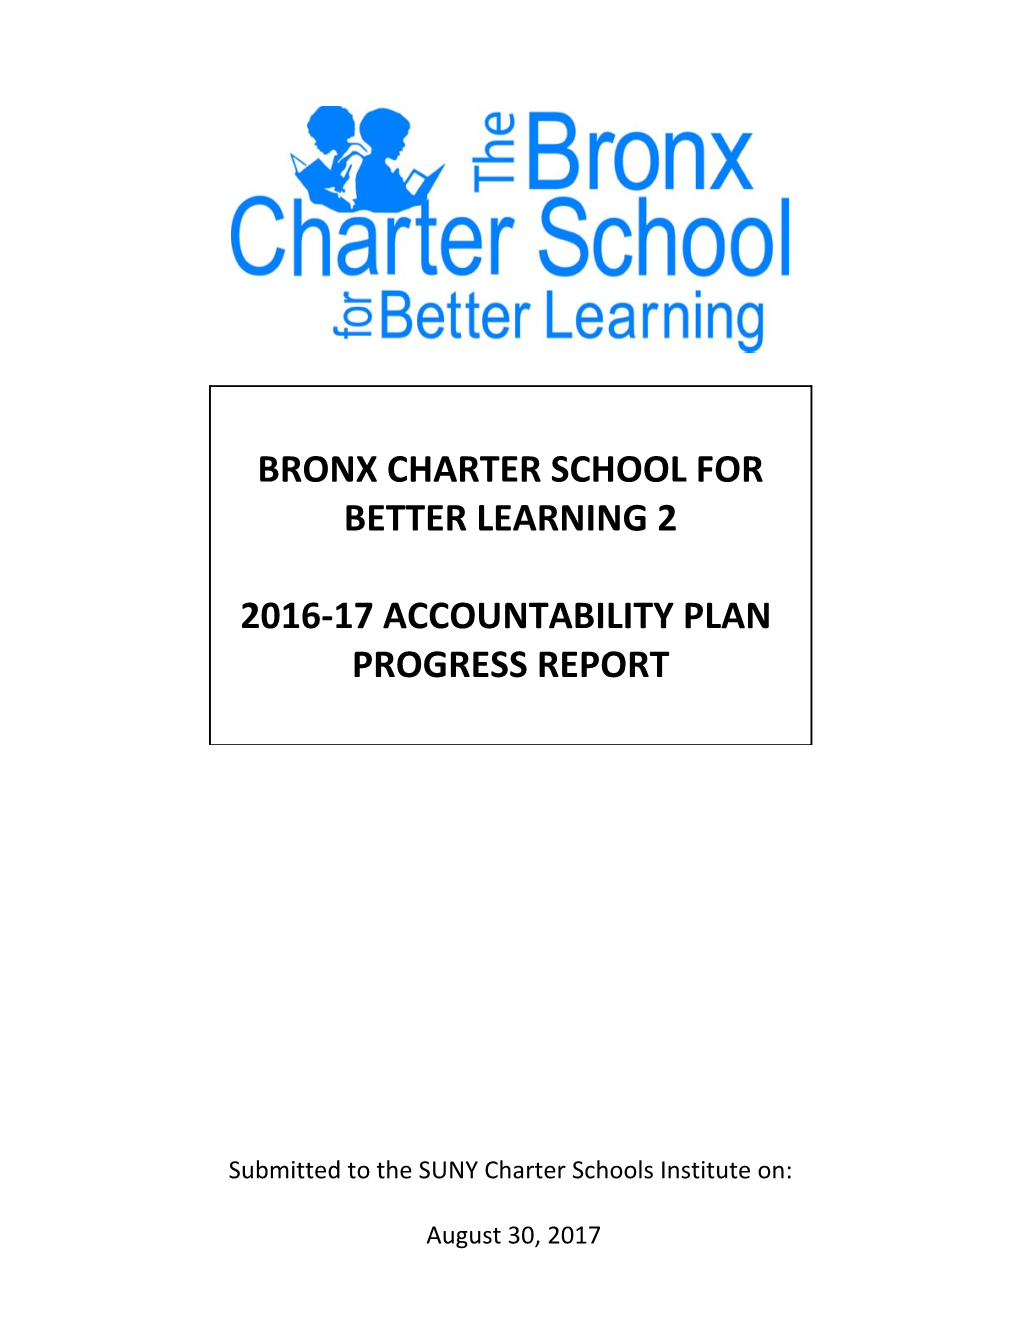 Accountability Plan Progress Report Template